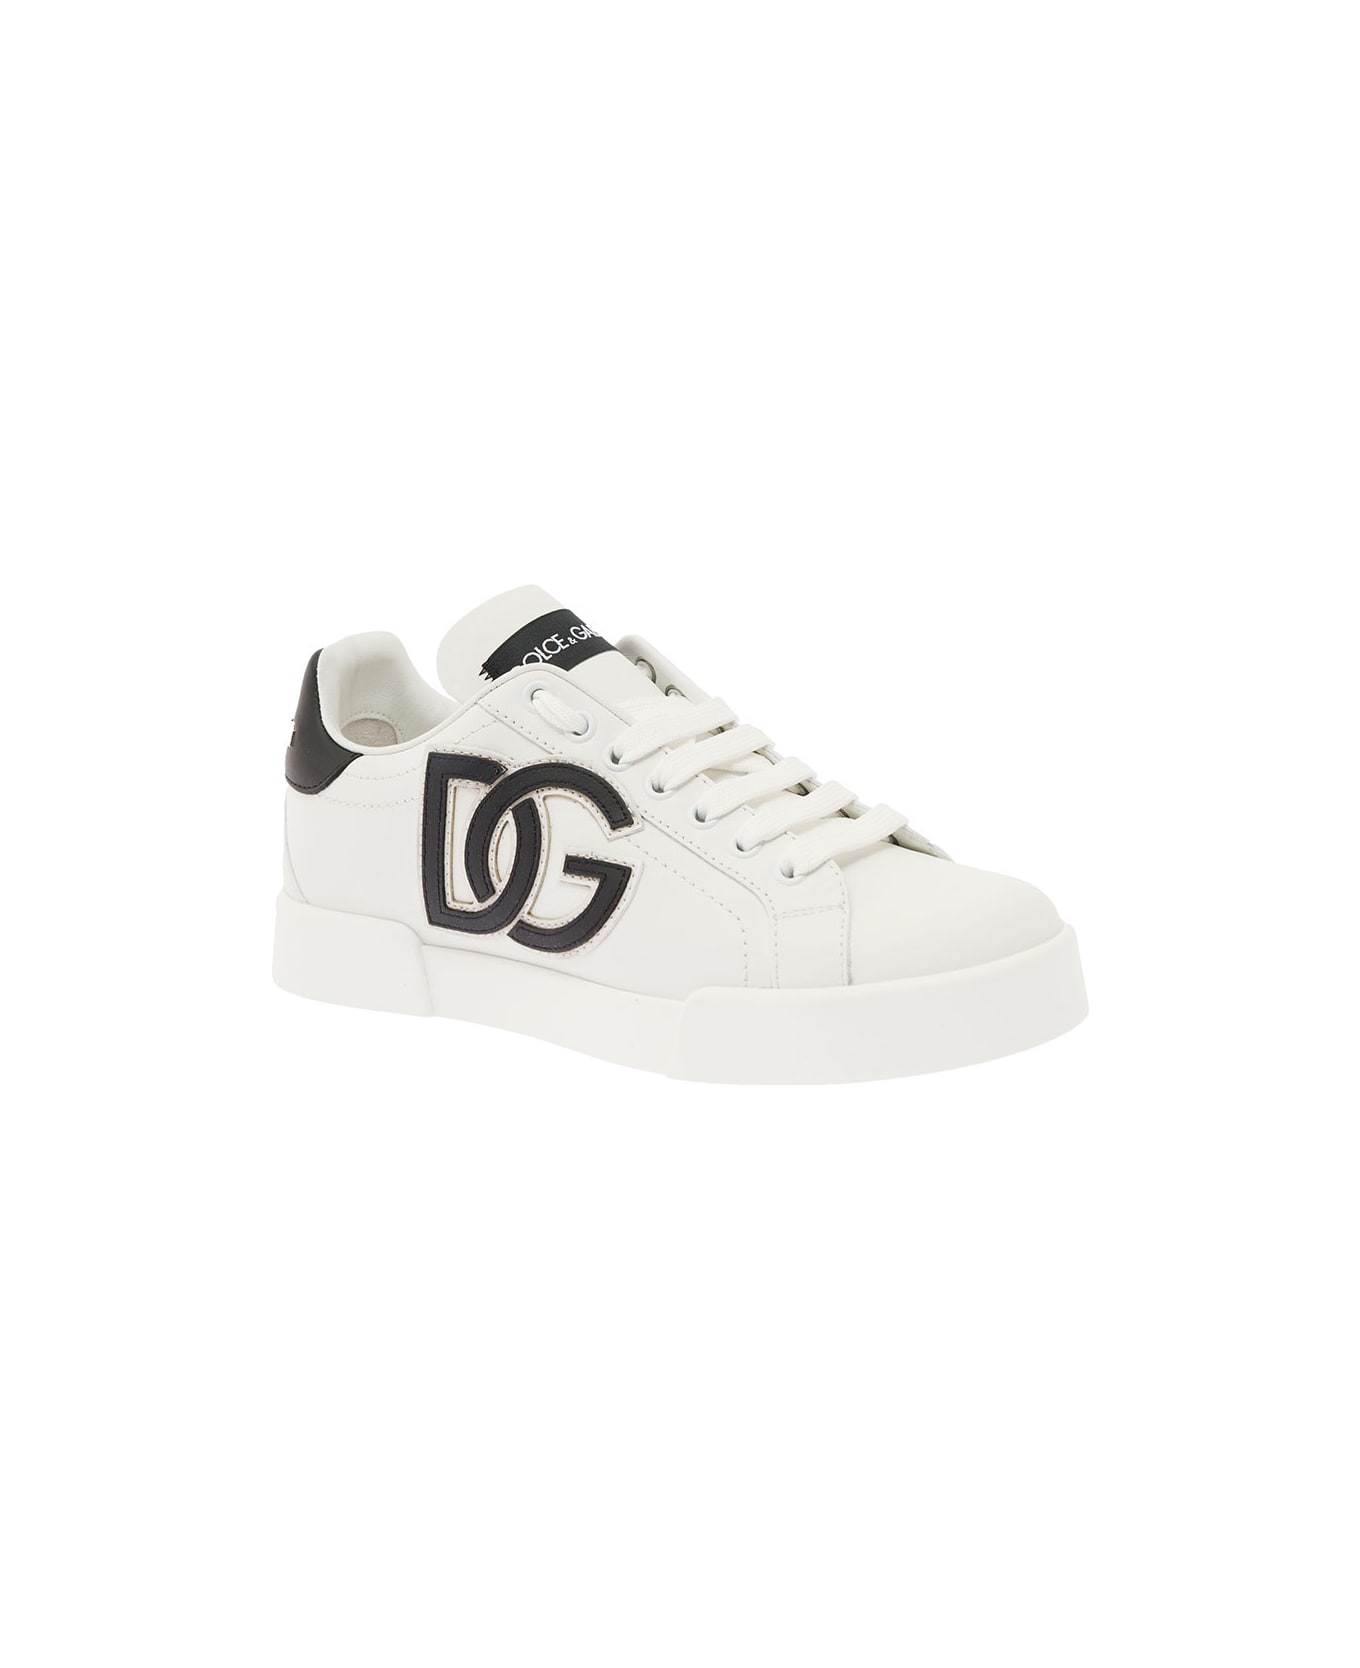 Dolce & Gabbana White Portofino Sneakers In Leather With Dg Logo Patch Dolce & Gabbana Woman - White